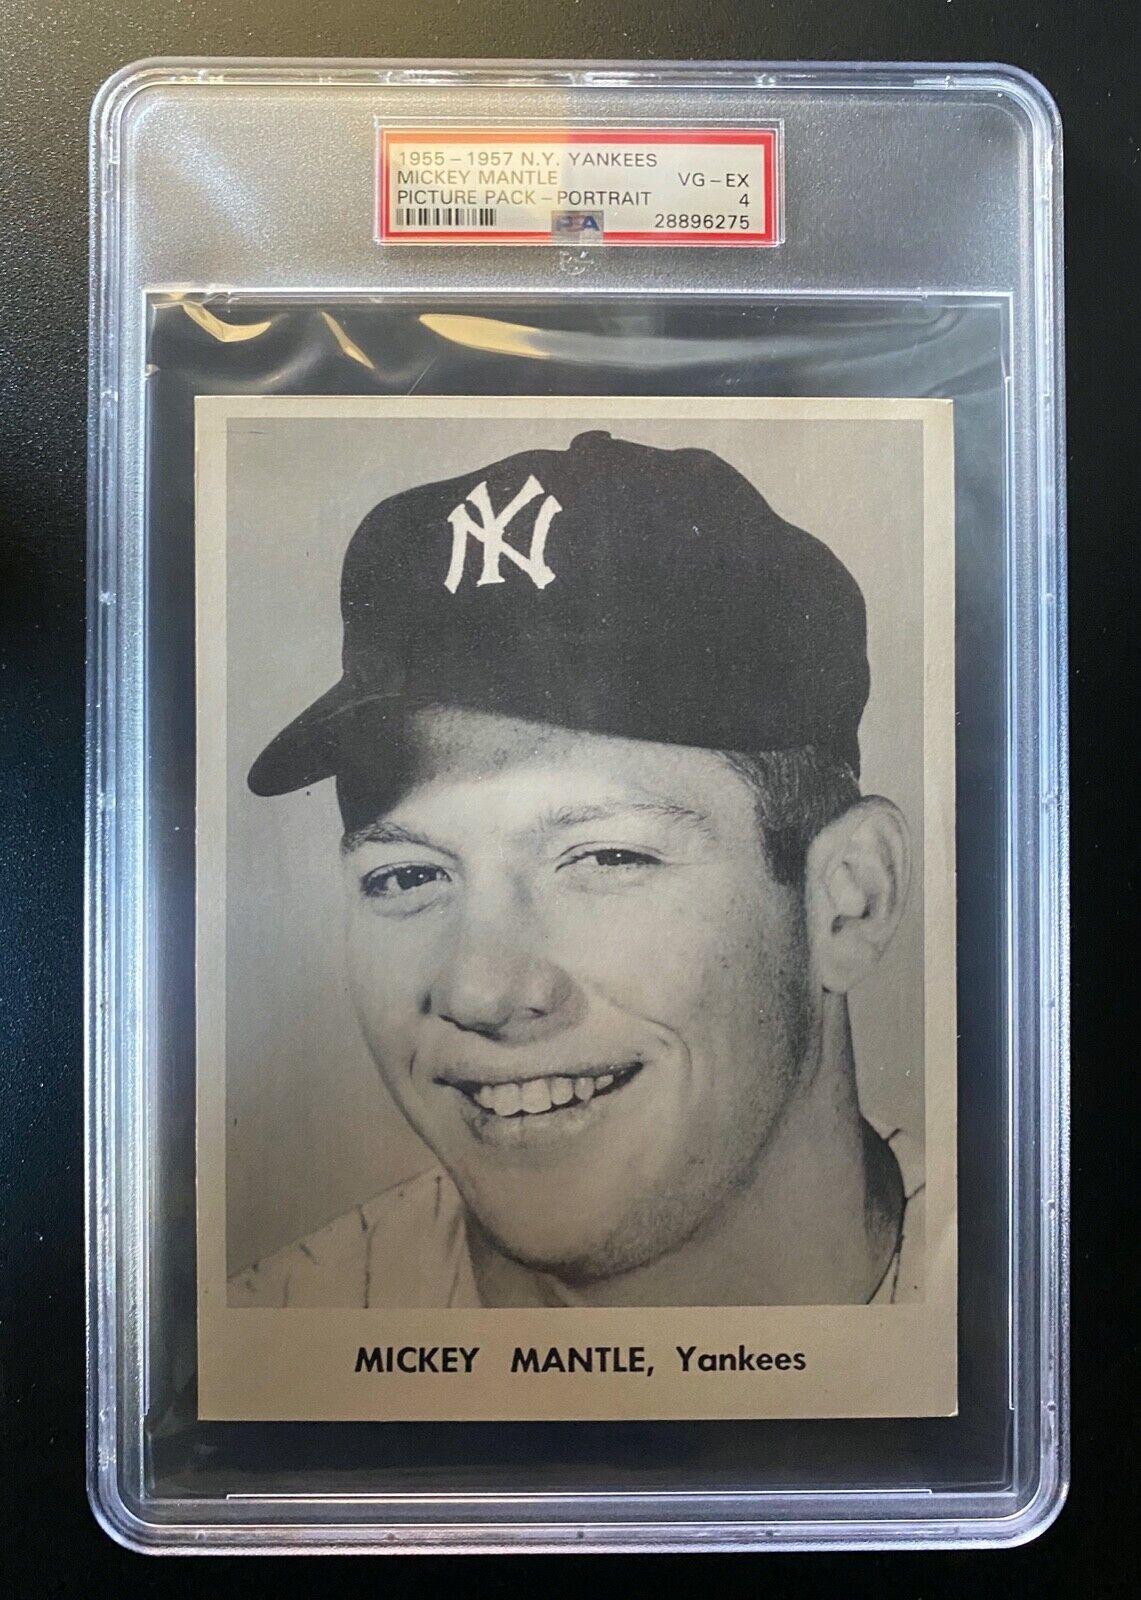 1955-1957 N.Y. Yankees Picture Pack Portrait Mickey Mantle PSA 4 VG-EX 1955-57